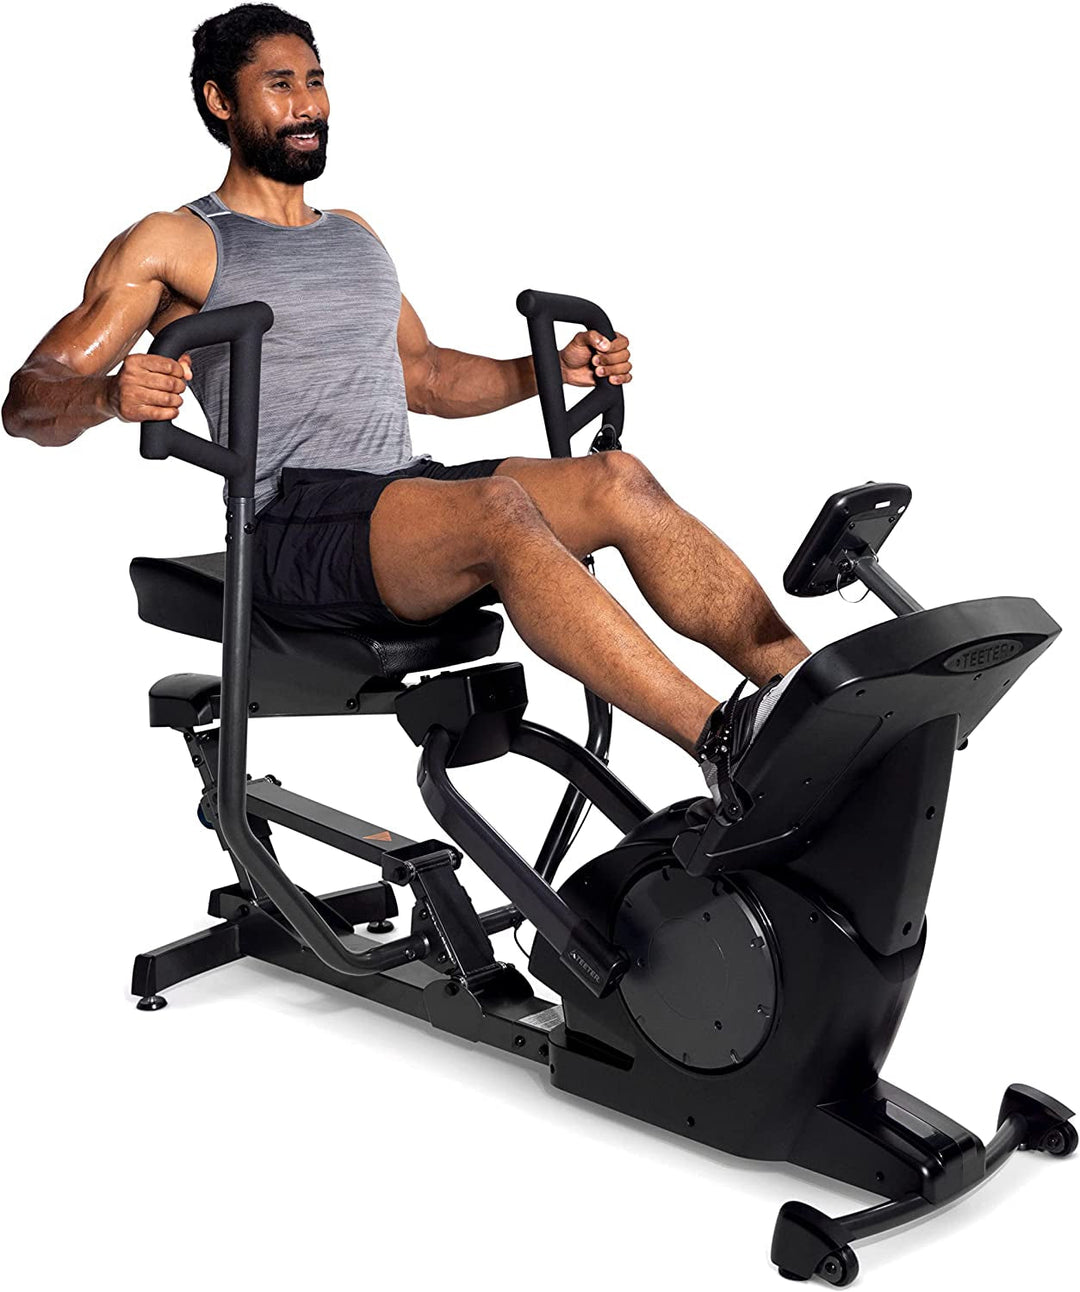 Teeter Power10 Rower with 2-Way Magnetic Resistance Elliptical Motion – Indoor Rowing Machine